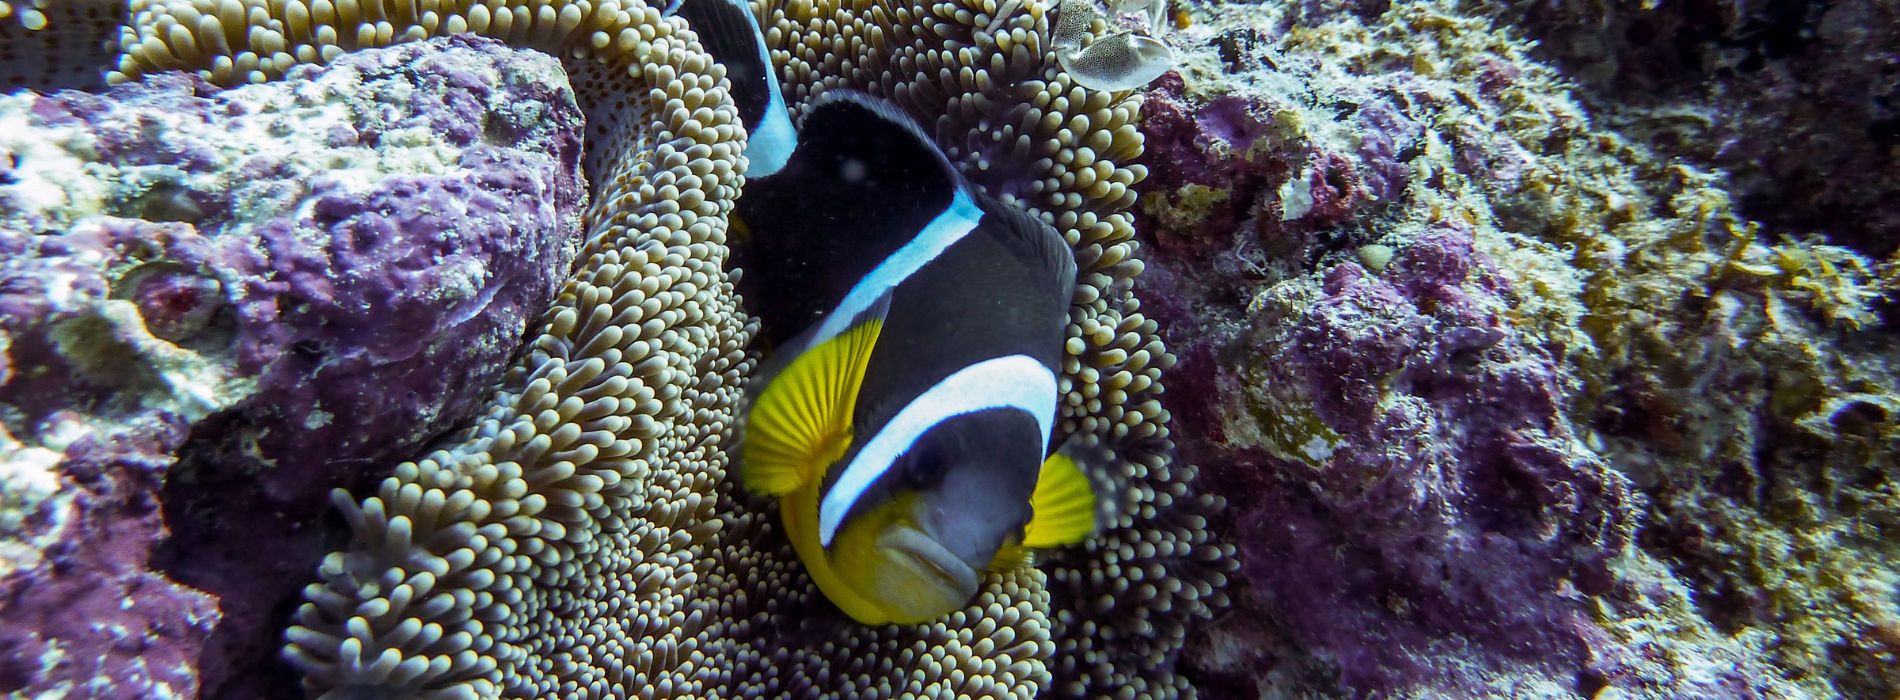 Mauritian-anemonefish-front-view